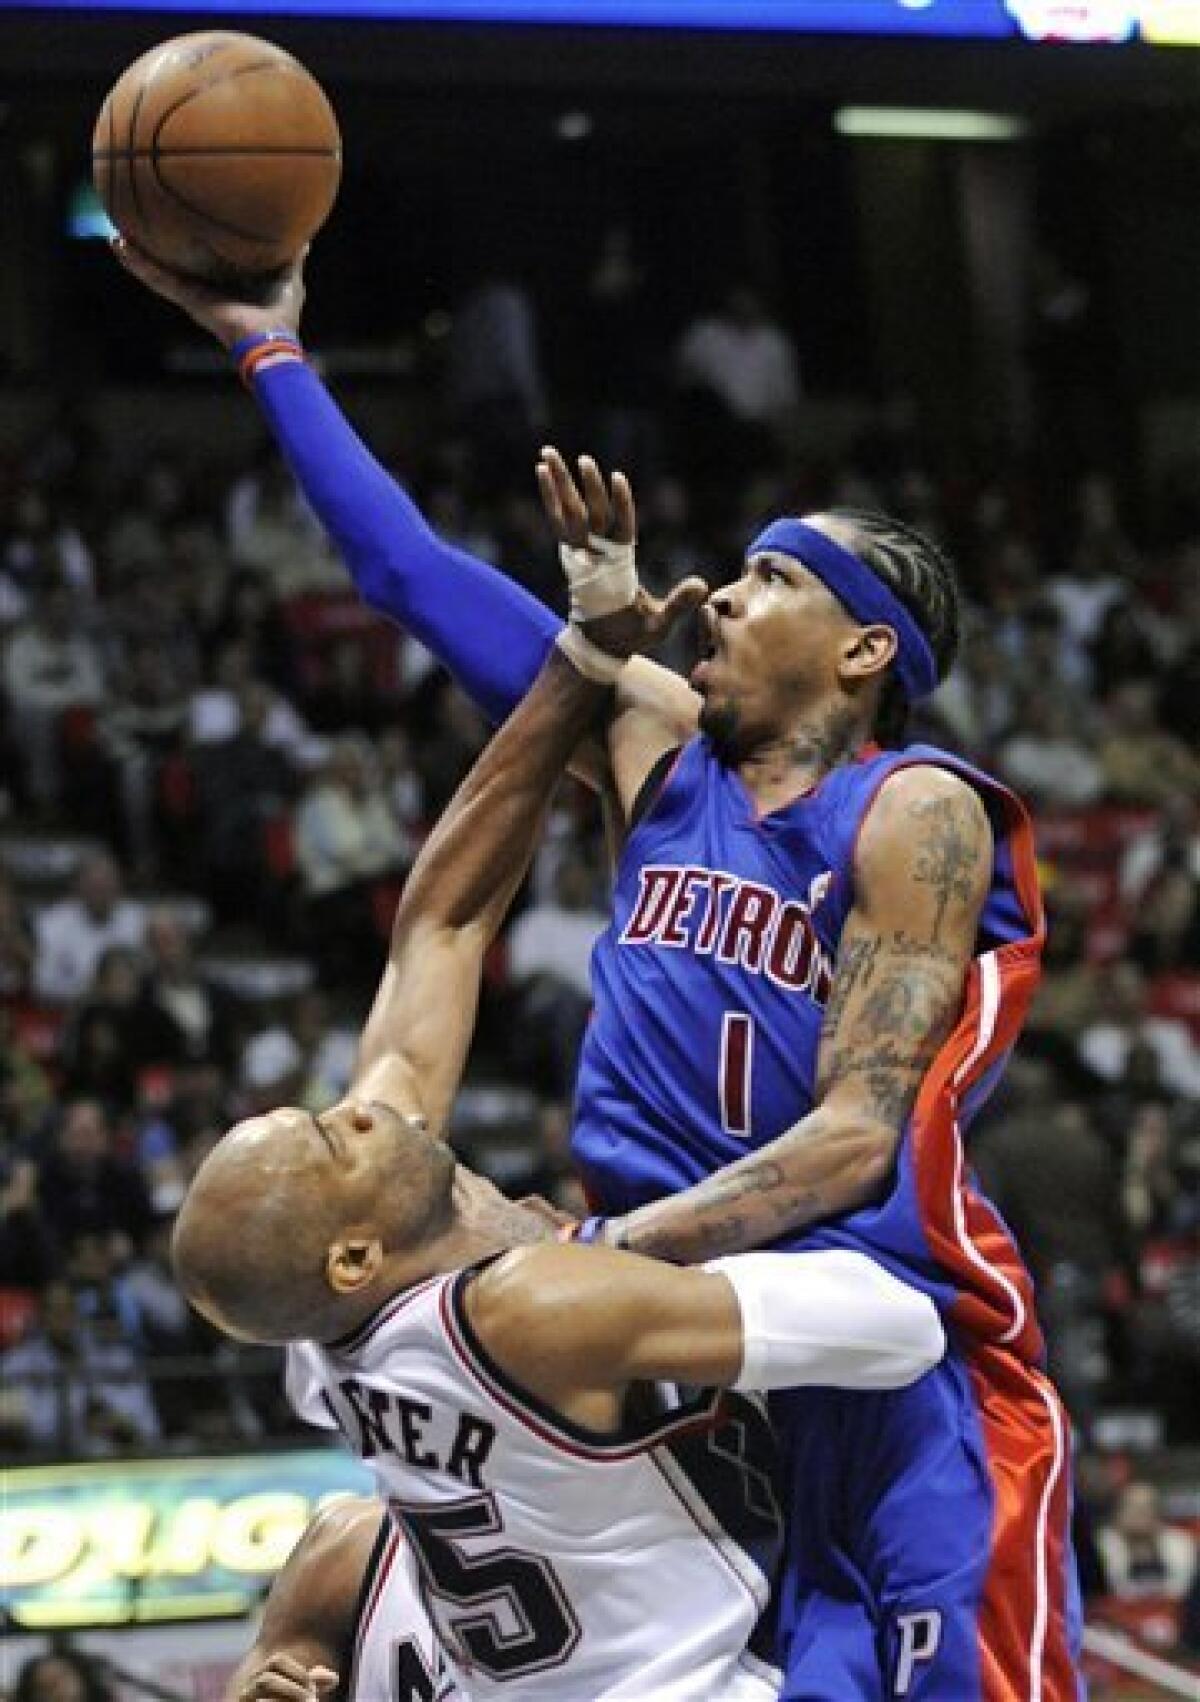 Allen Iverson Pistons' Debut 24pts 6asts vs Nets NBA 08/09 sick